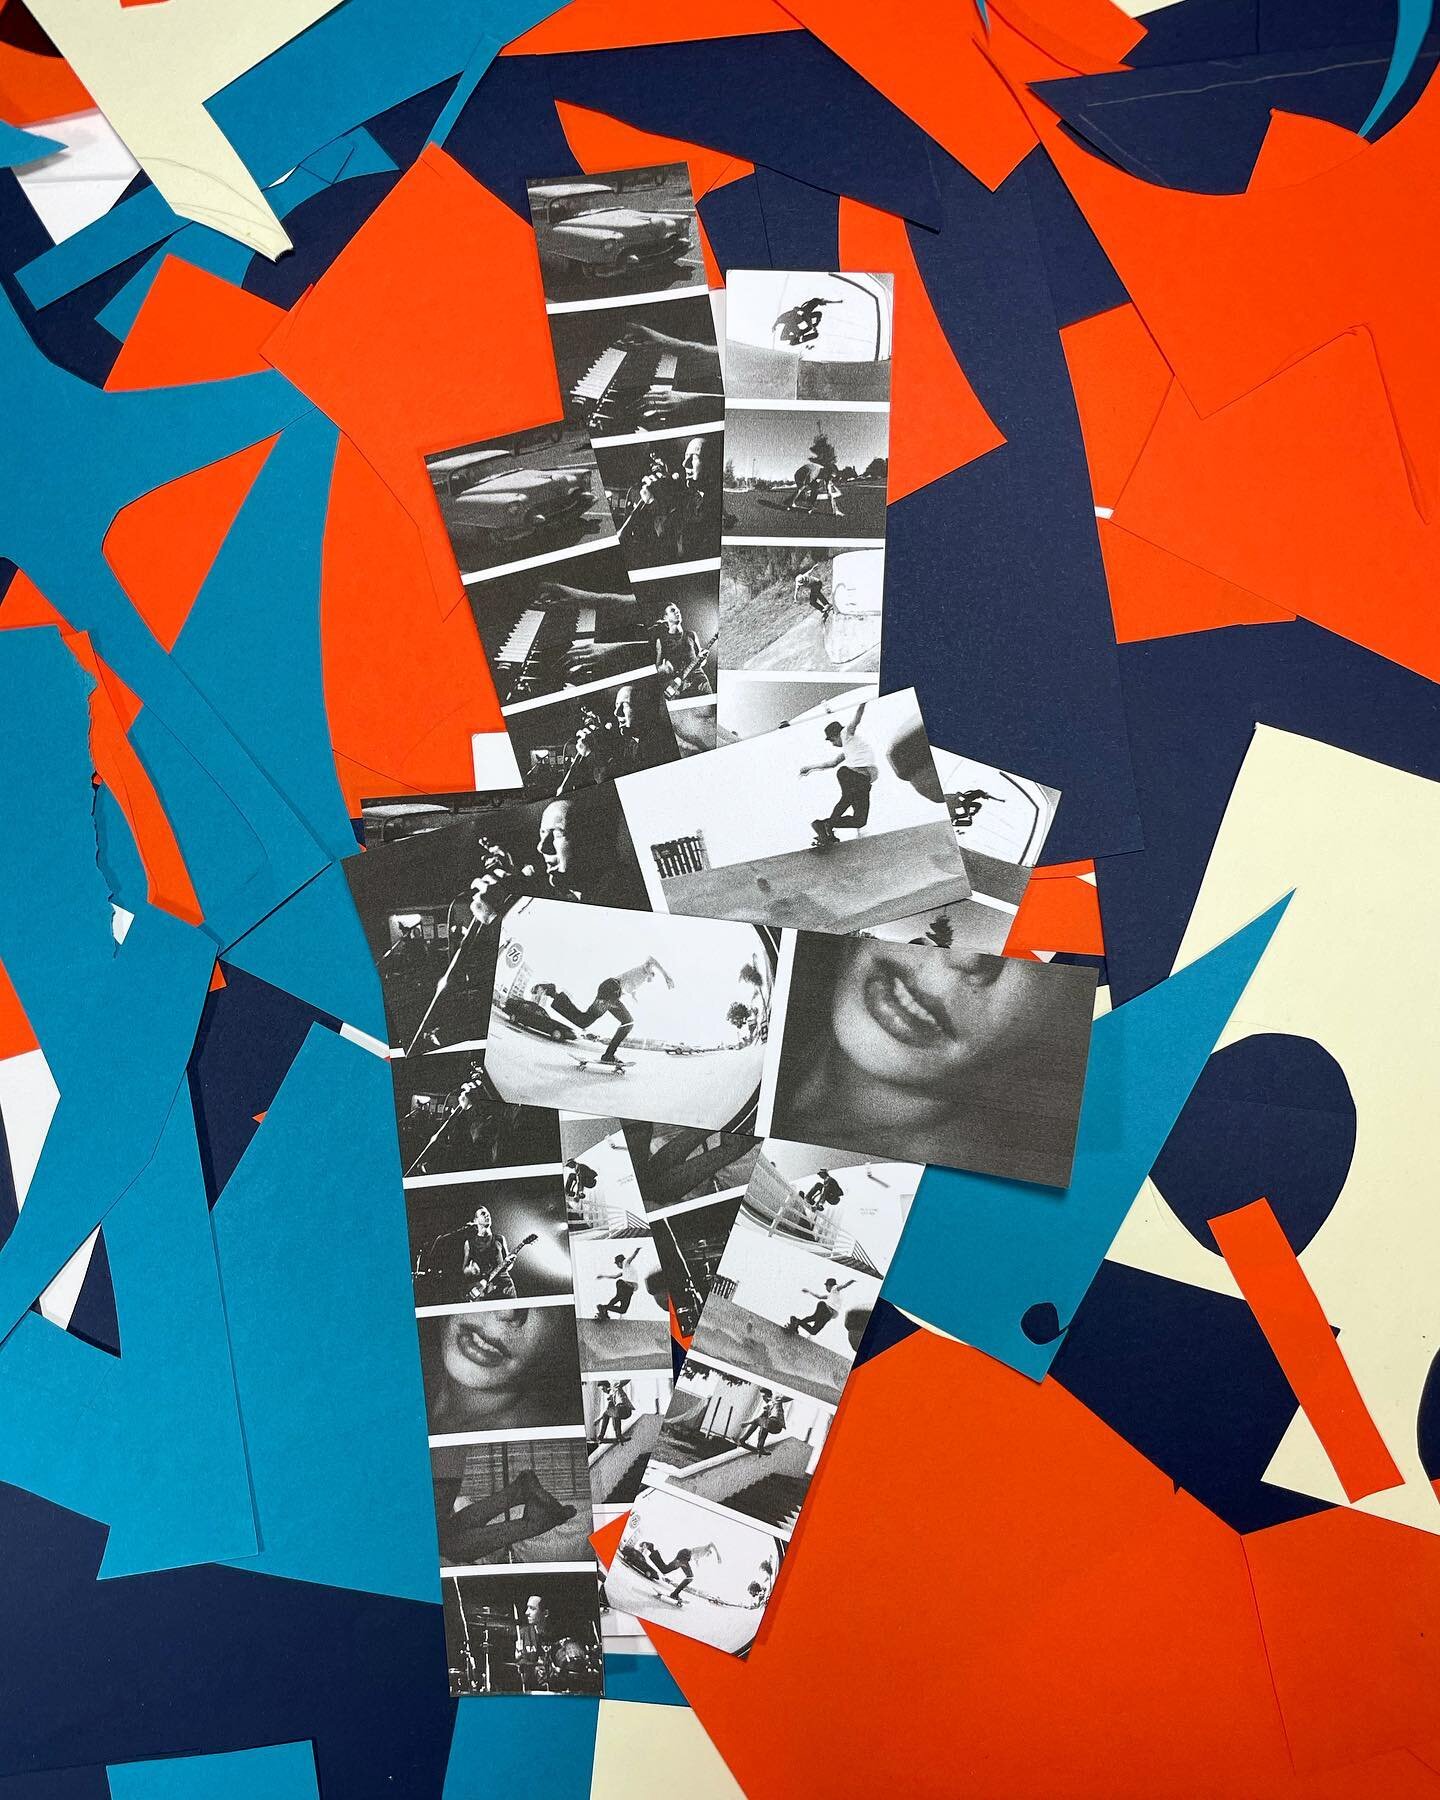 Joe Strummer - Coma Girl // Jason Adams - bag of suck 
. 
#joestrummer #jasonadams #collage